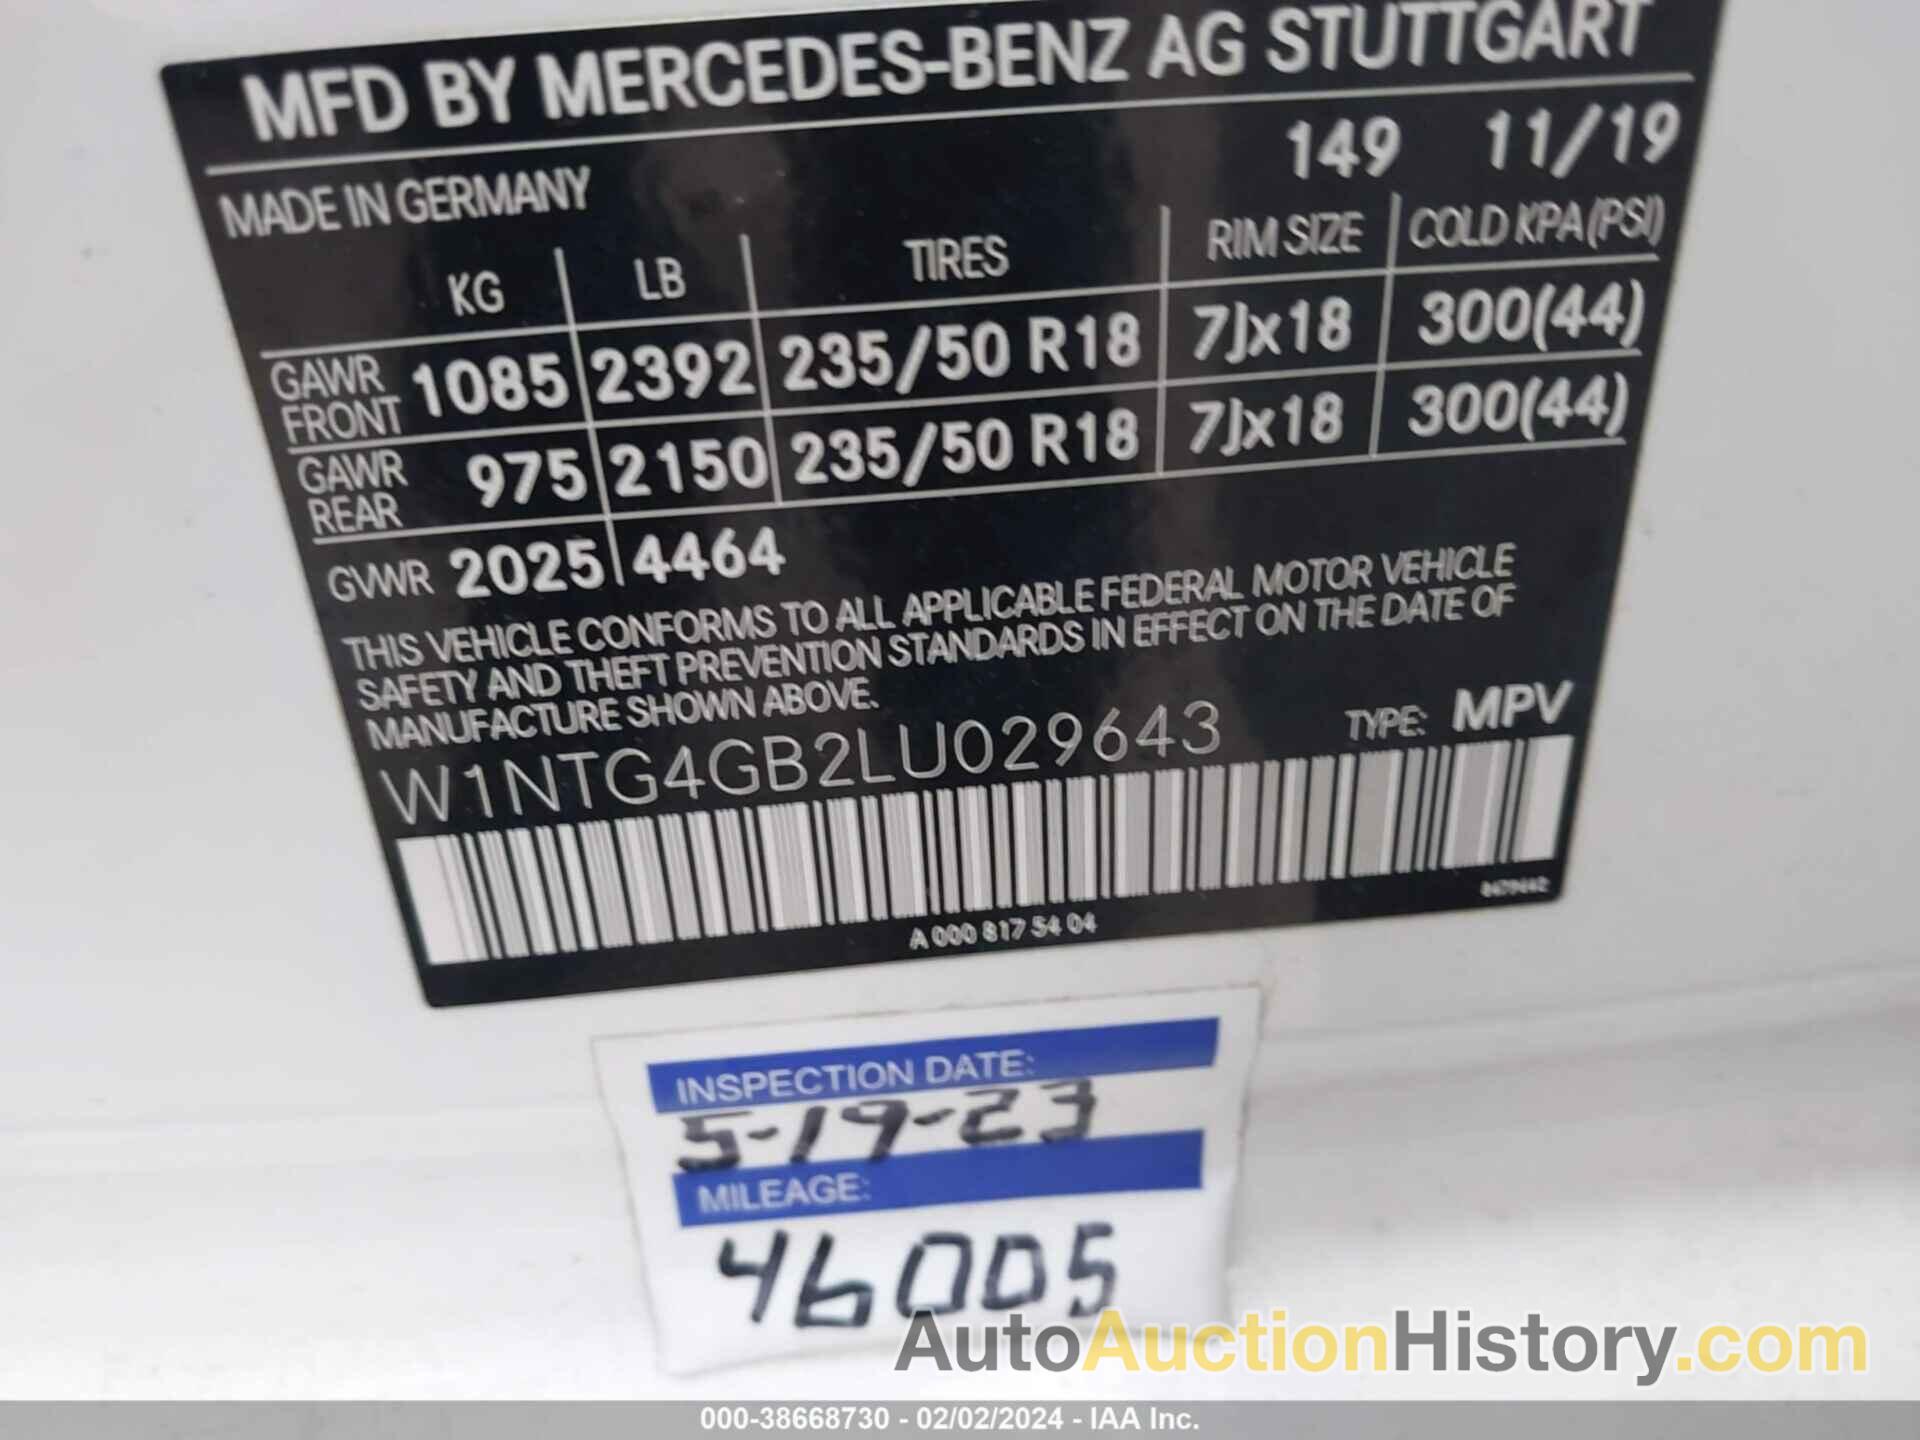 MERCEDES-BENZ GLA 250 4MATIC, W1NTG4GB2LU029643